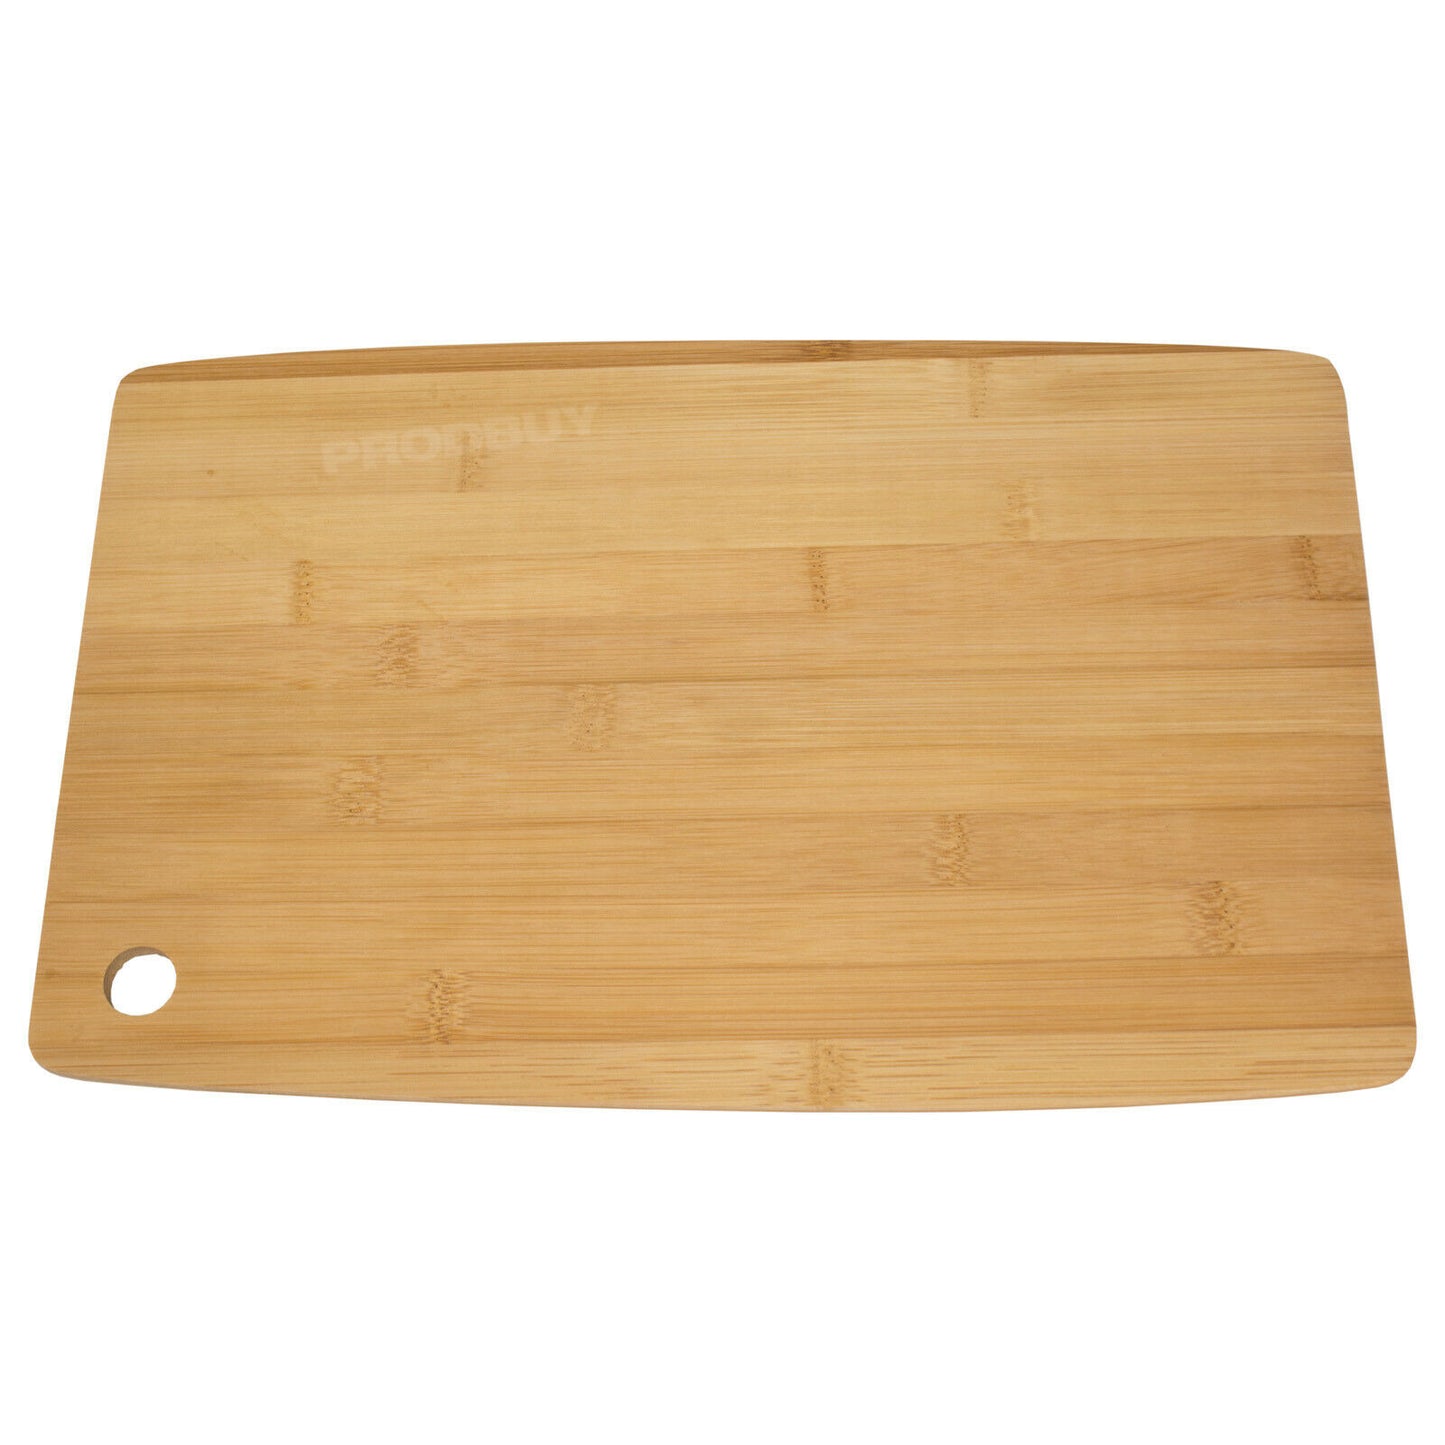 Bamboo Wooden Chopping Board 38cm x 24cm